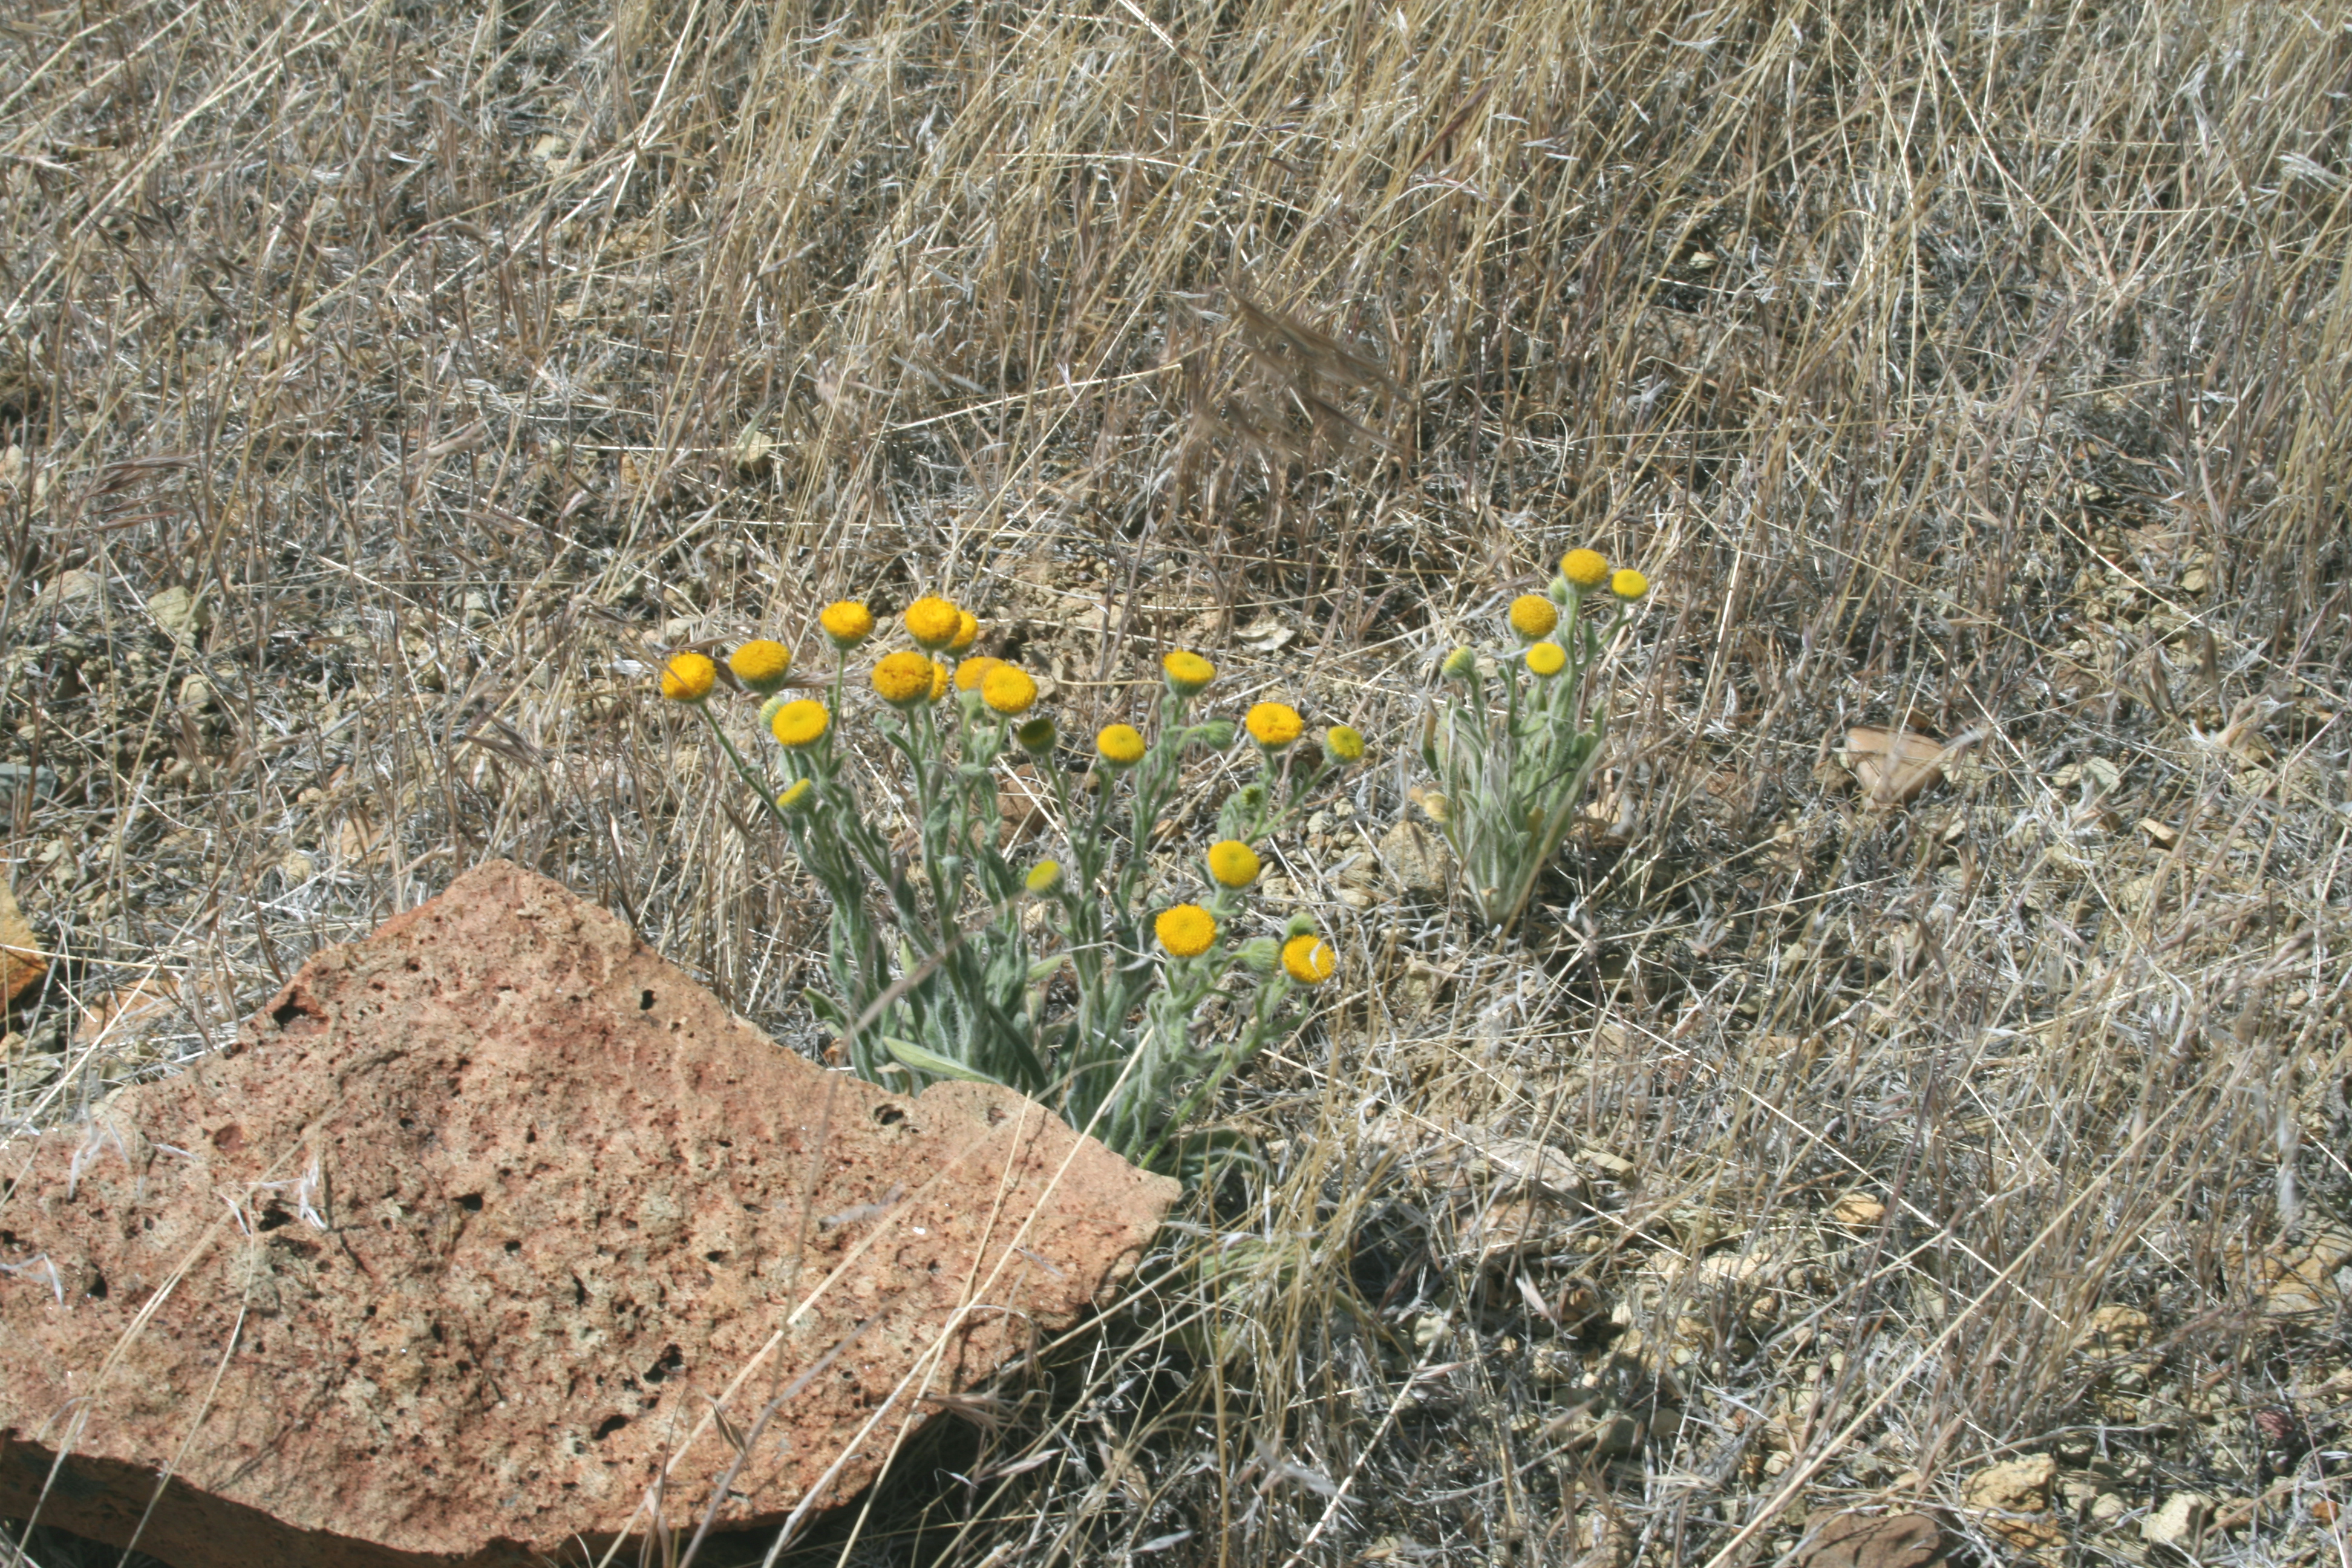 rayless shaggy fleabane, basin rayless daisy (Erigeron aphanactis)